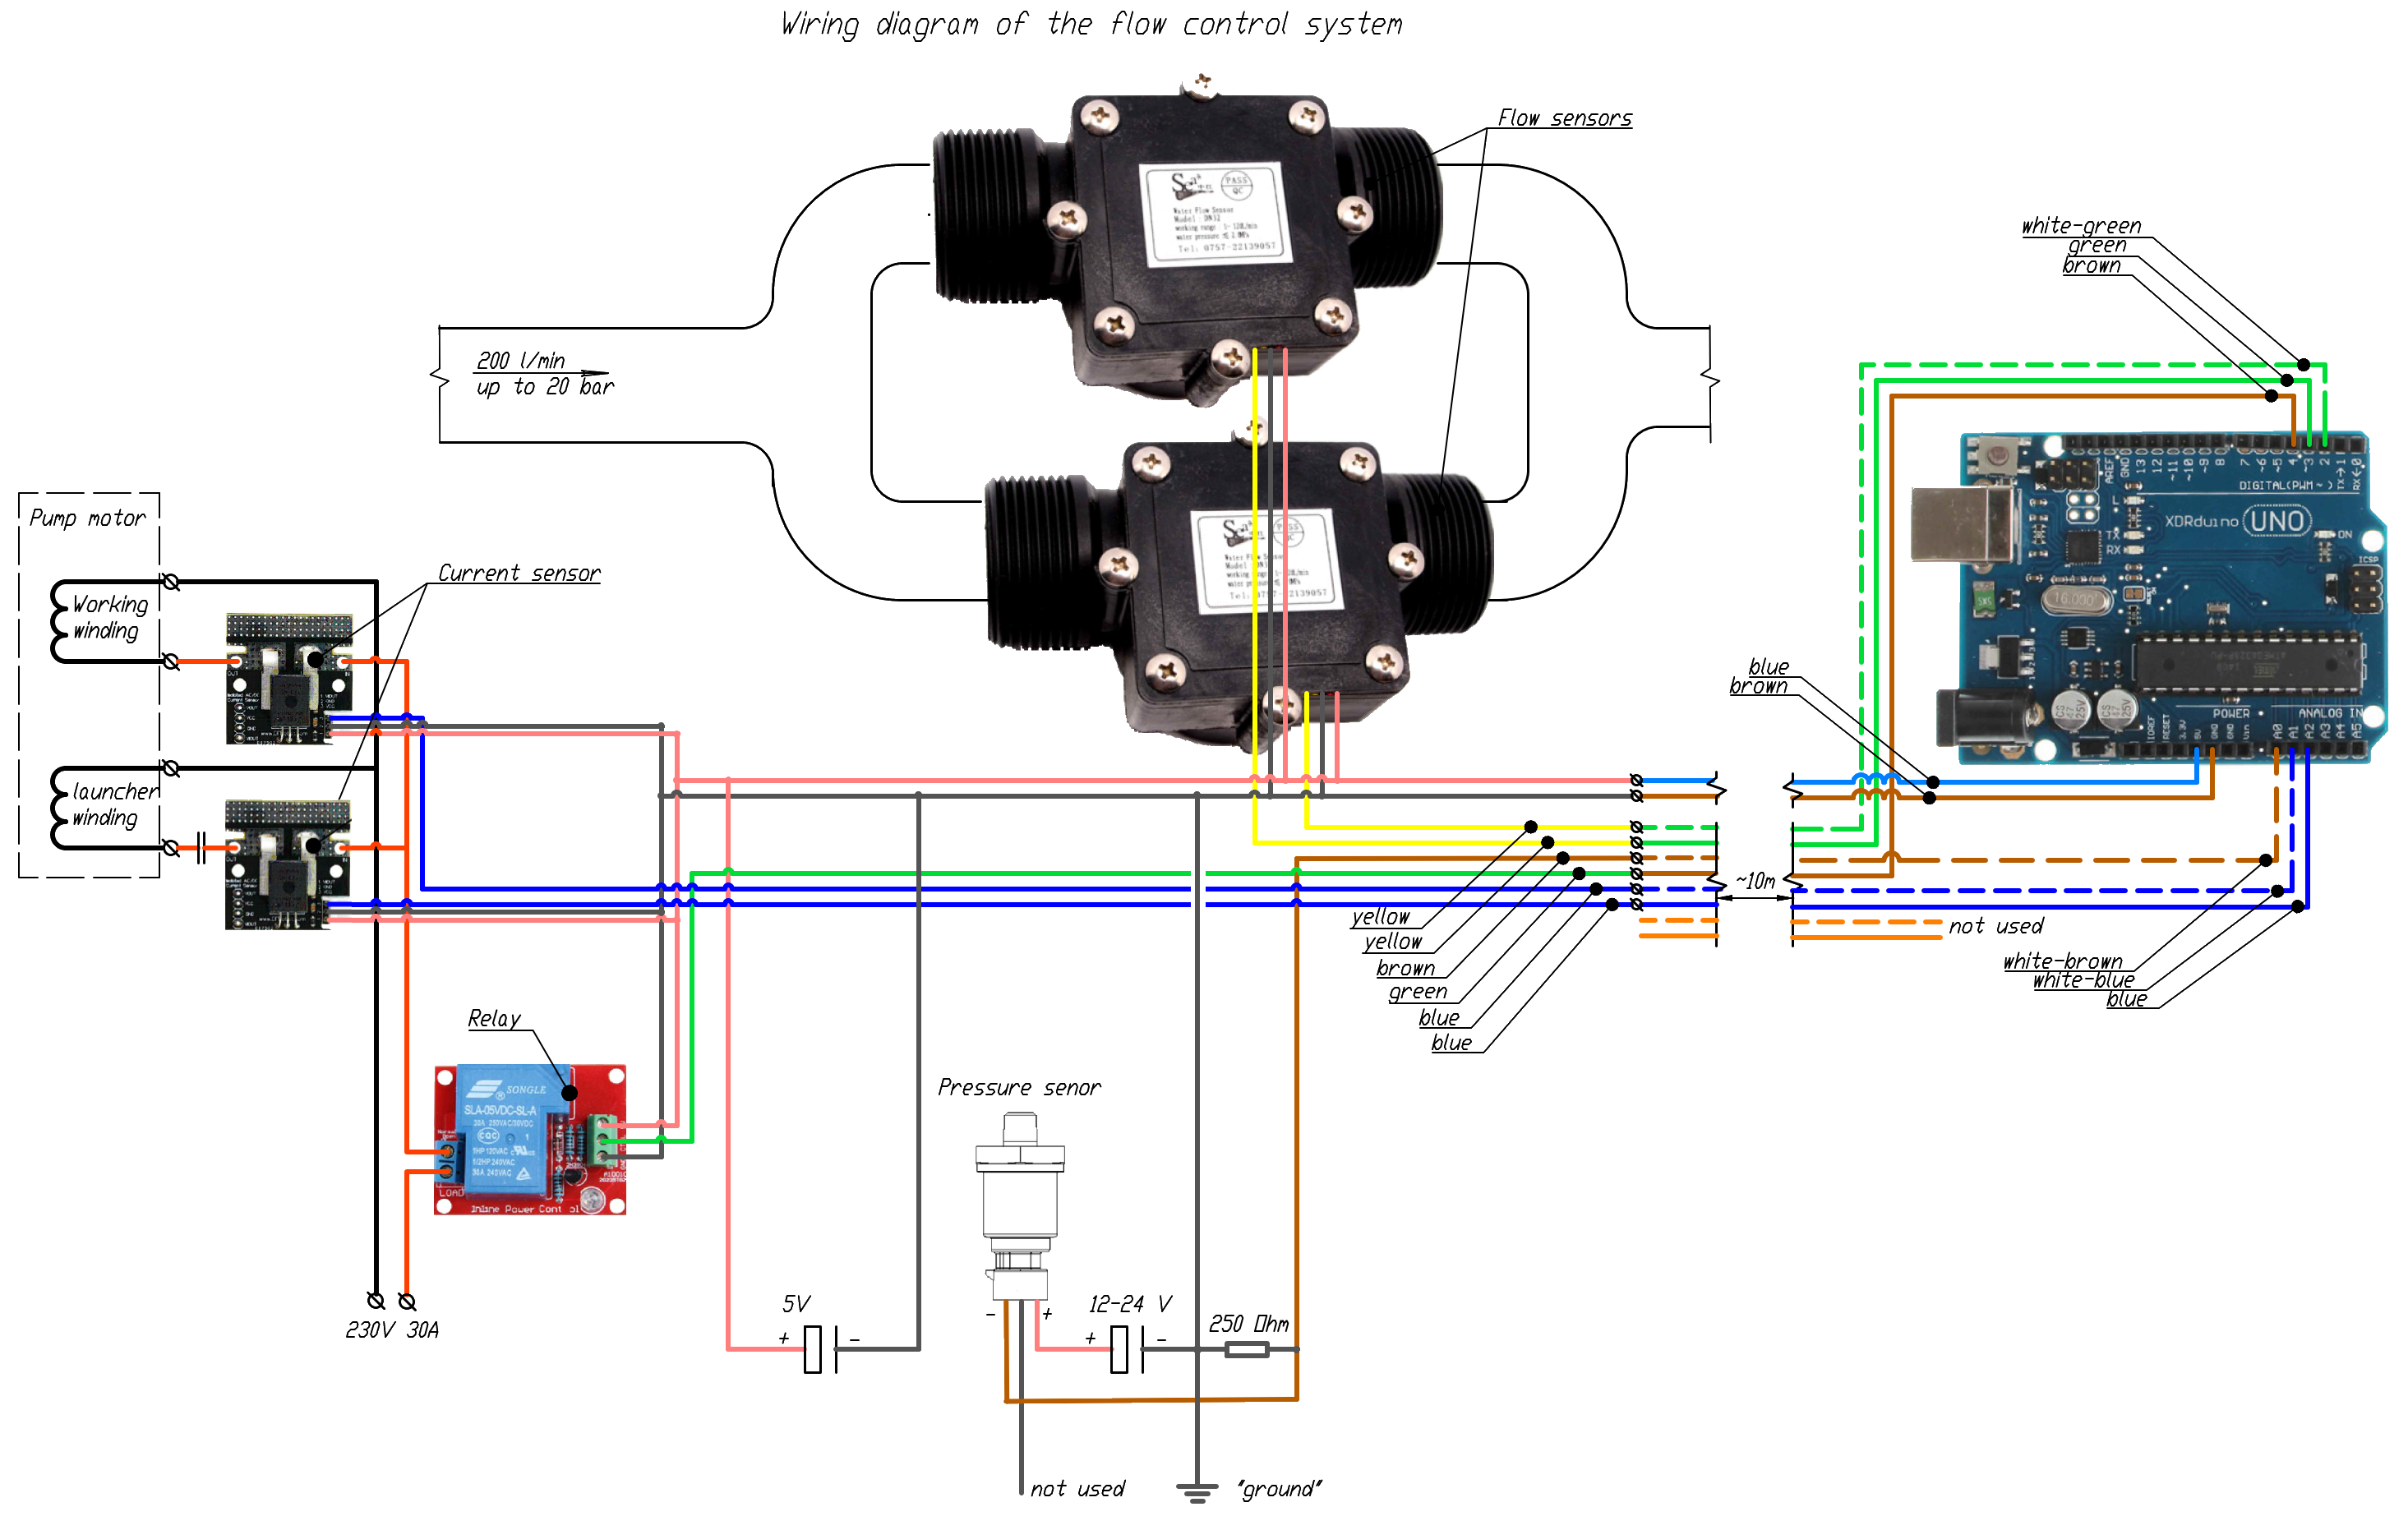 Flow control system wiring diagram